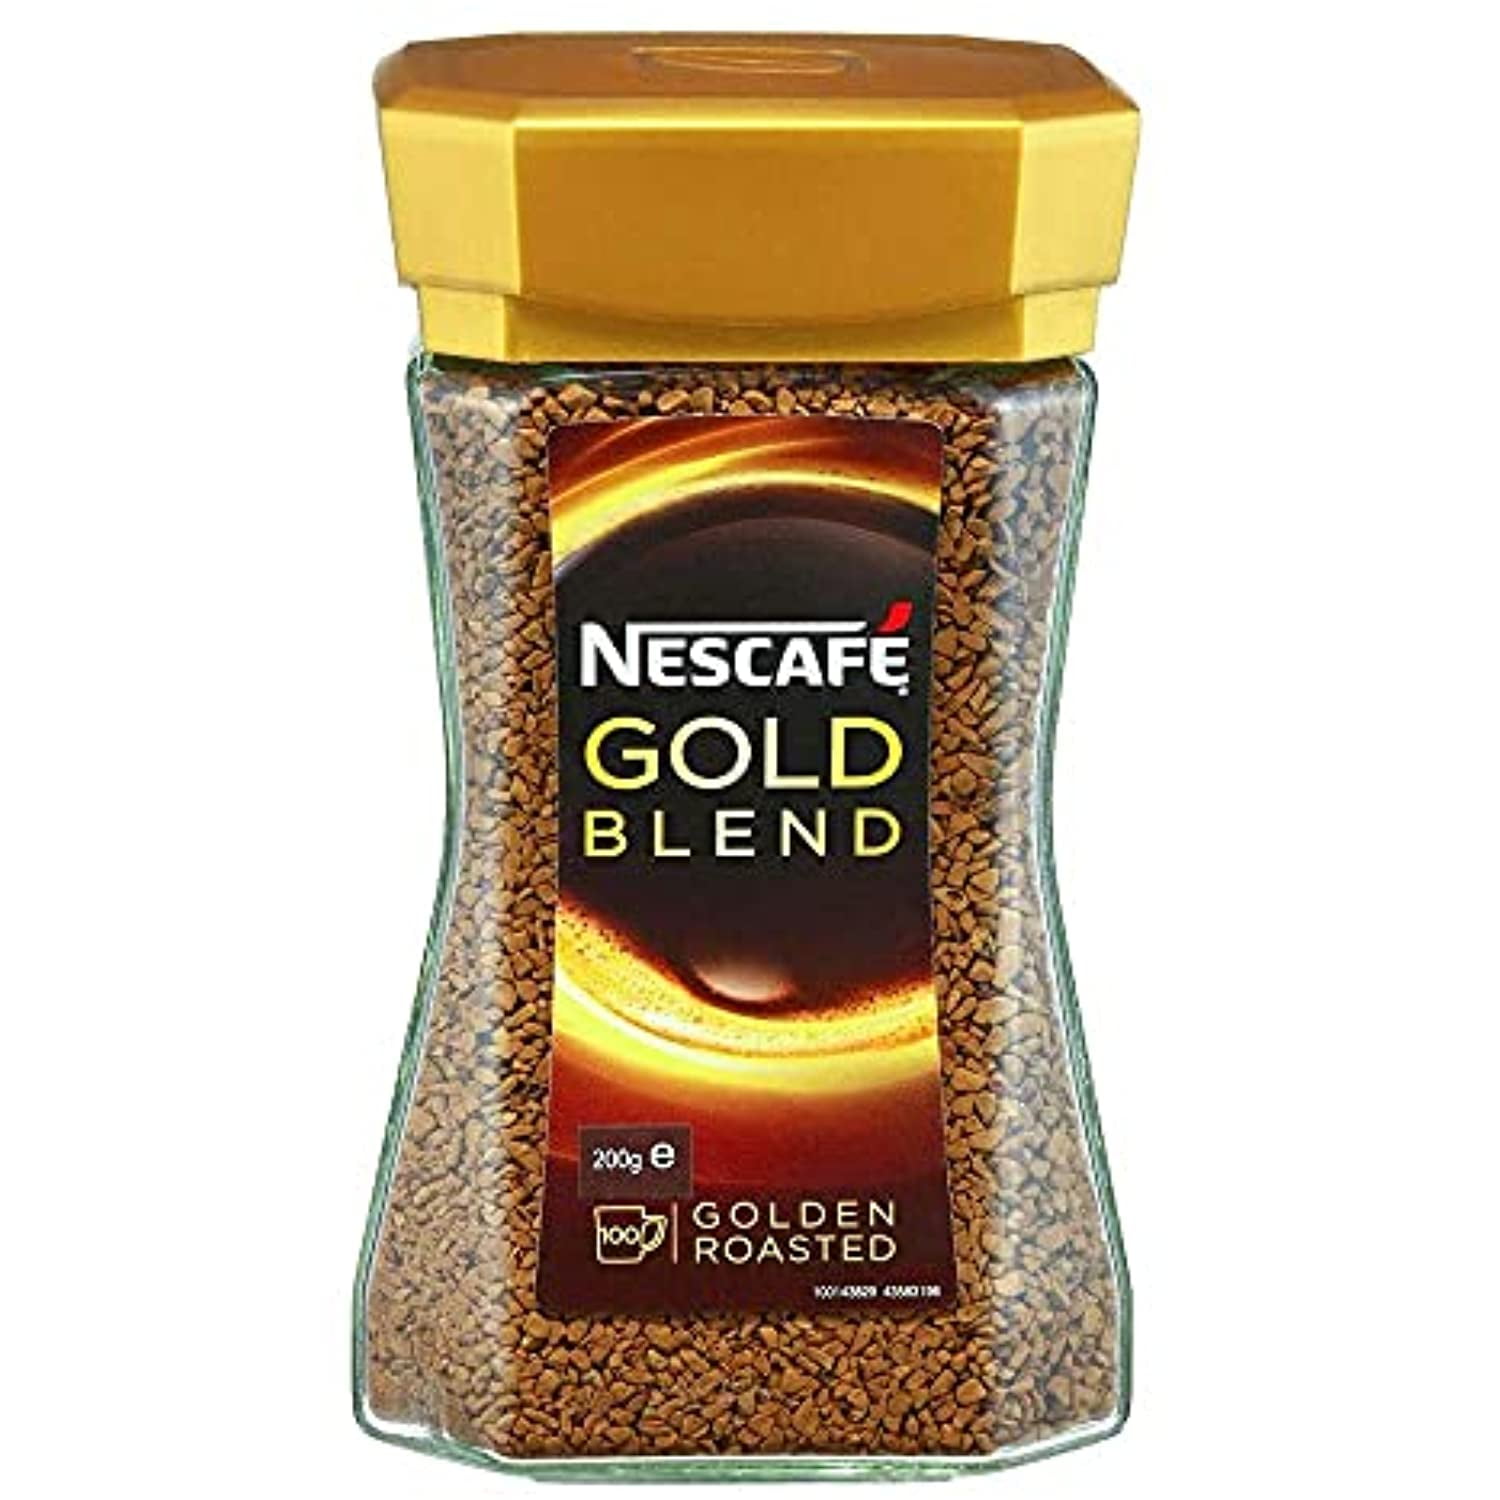 NESCAFÉ Gold System Pure Soluble Coffee Machine, Nescafe